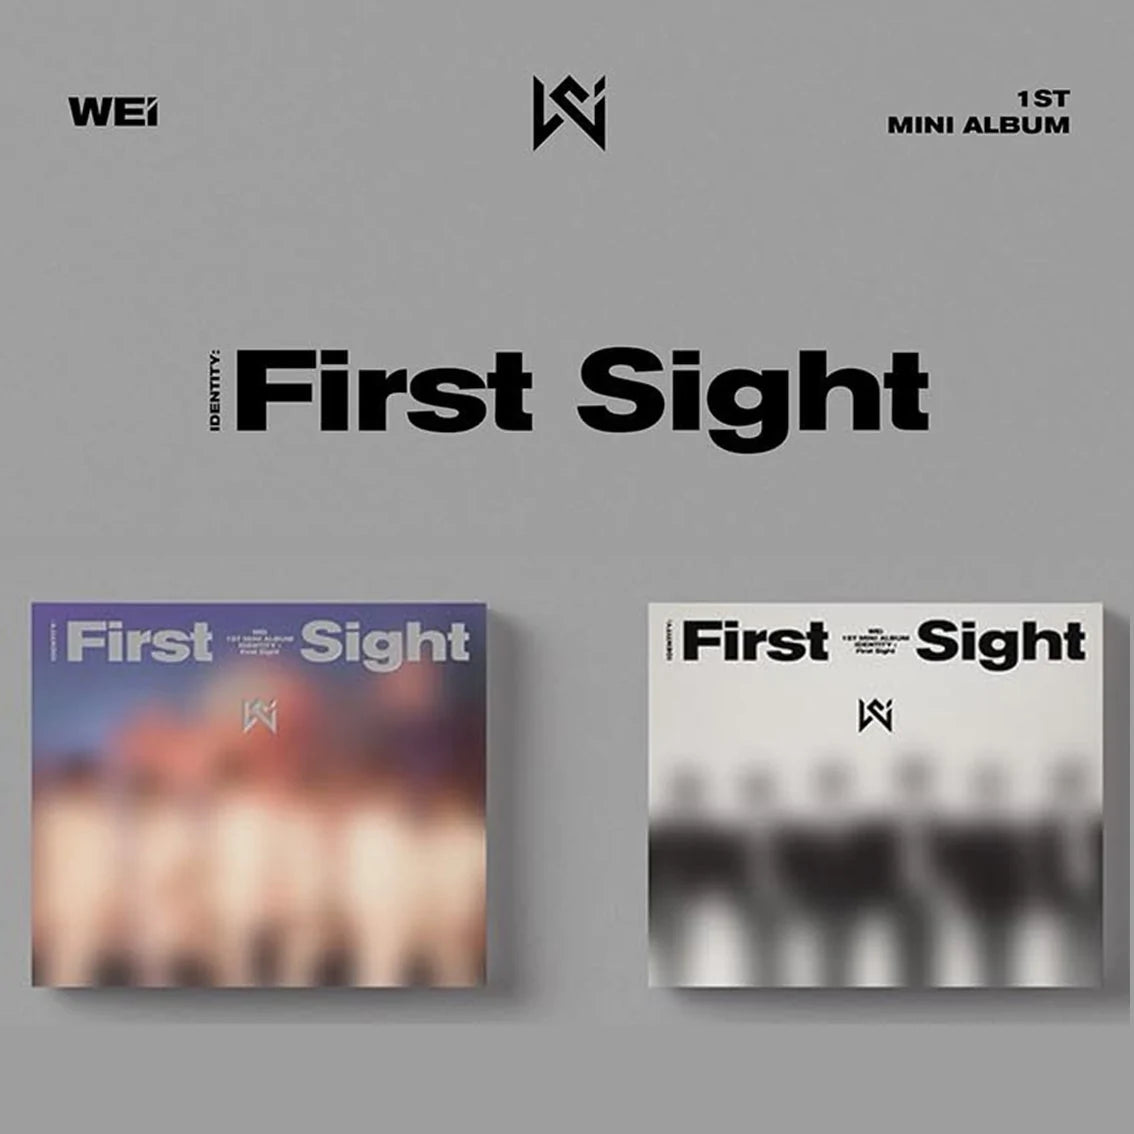 WEi - Identity: First Sight